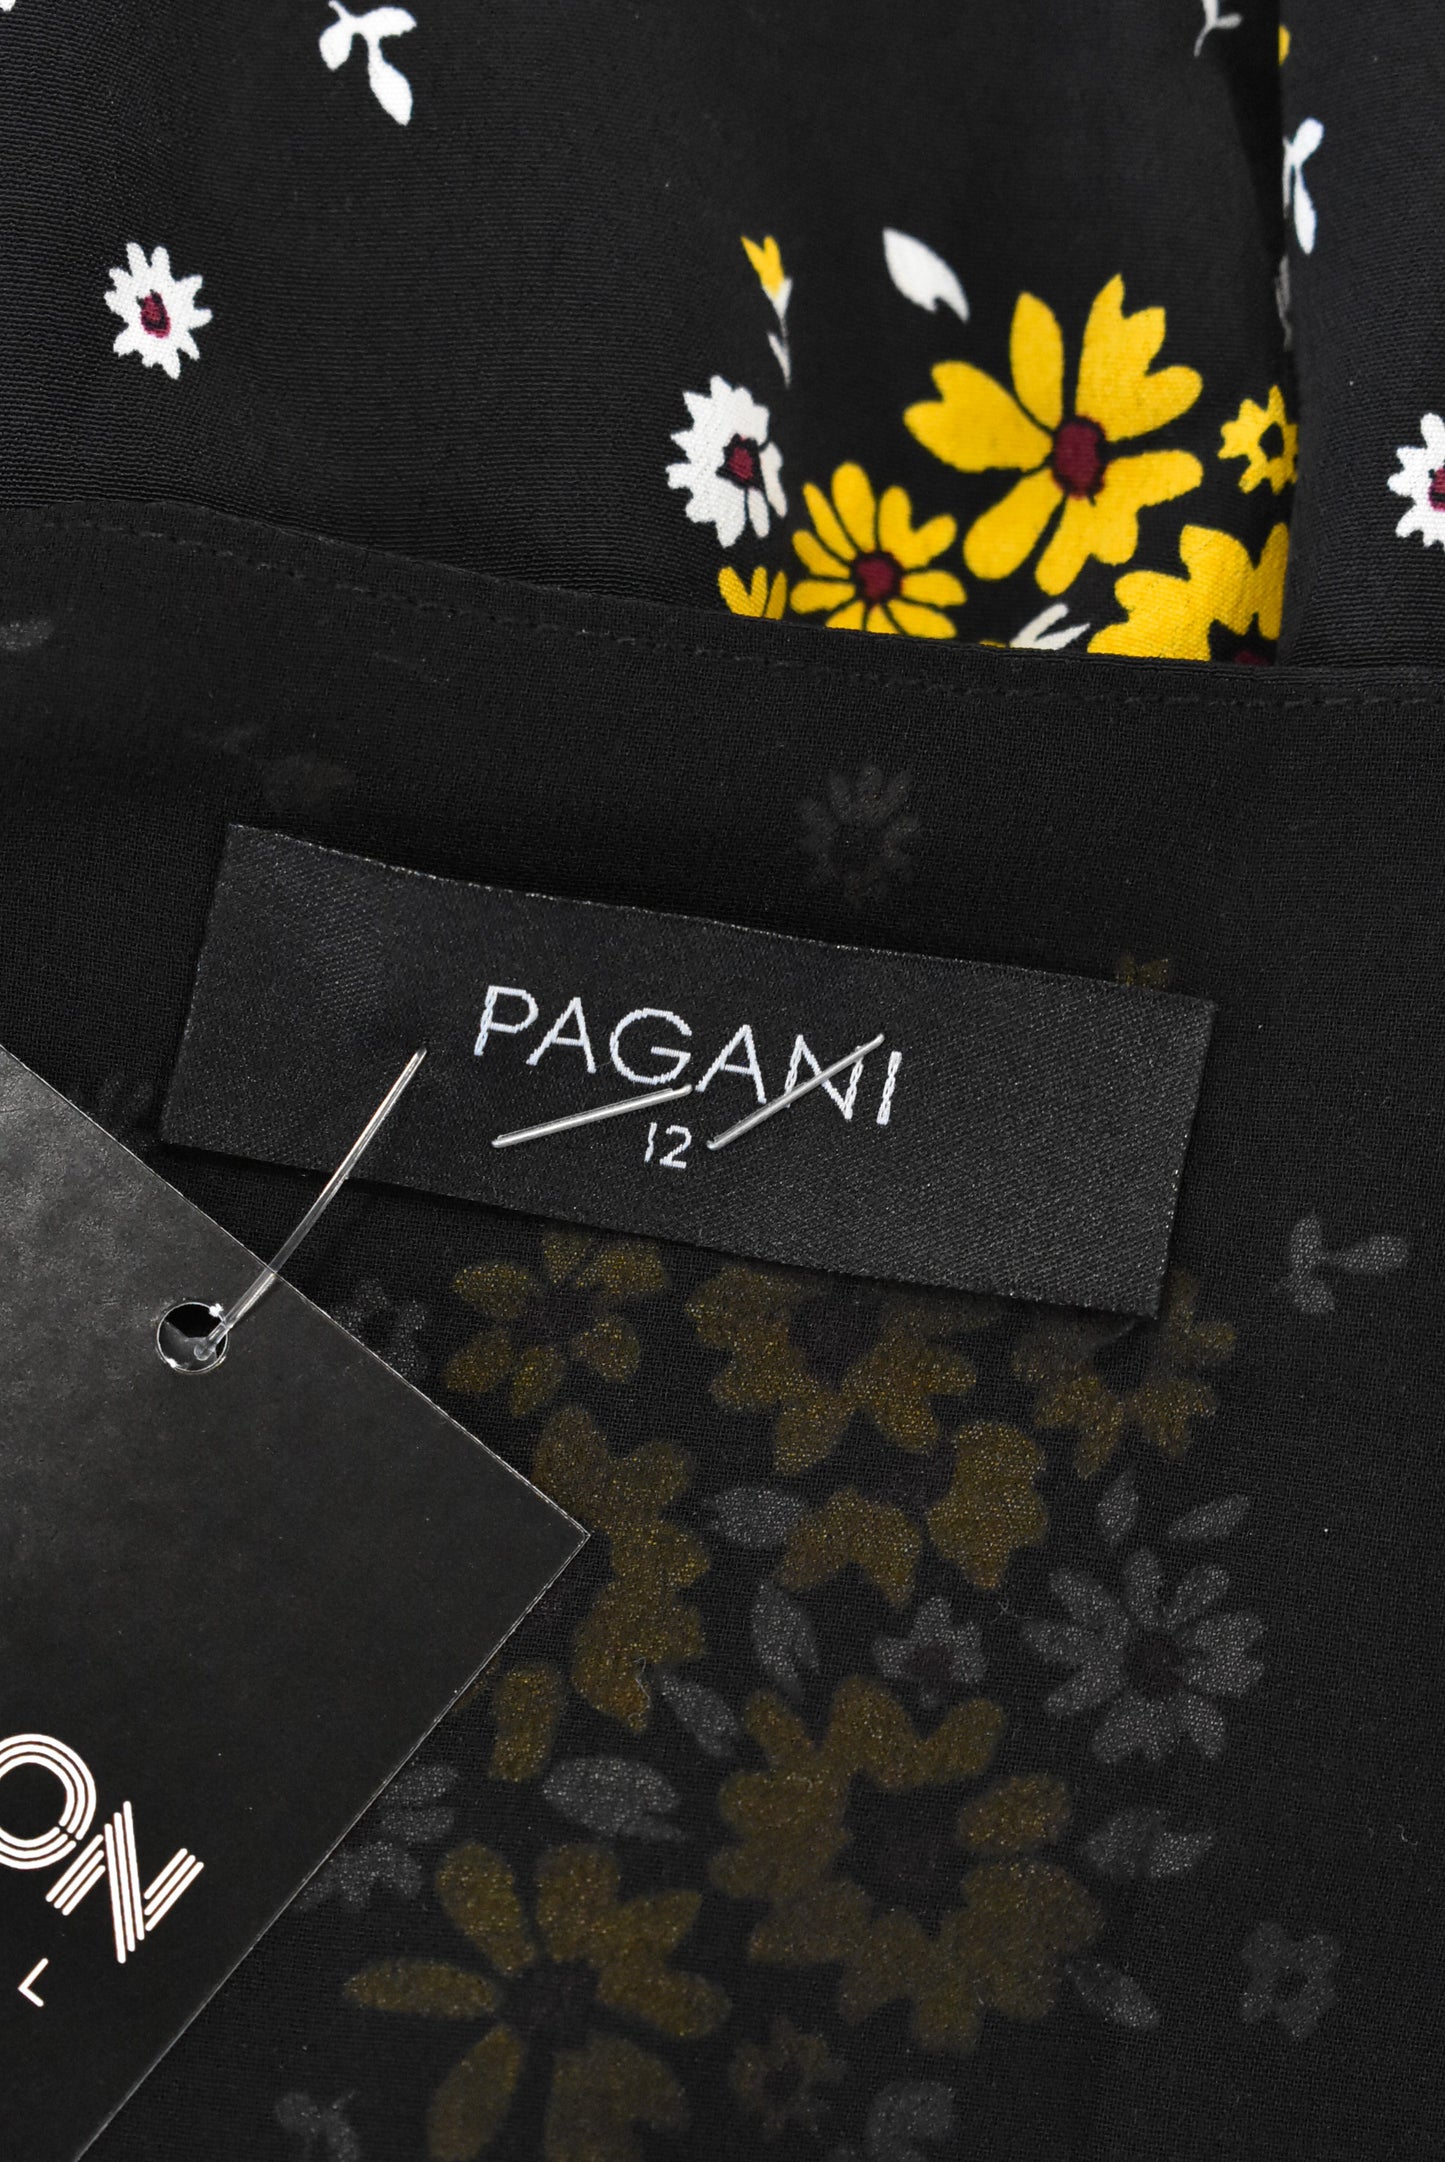 Pagani floral dress, 12